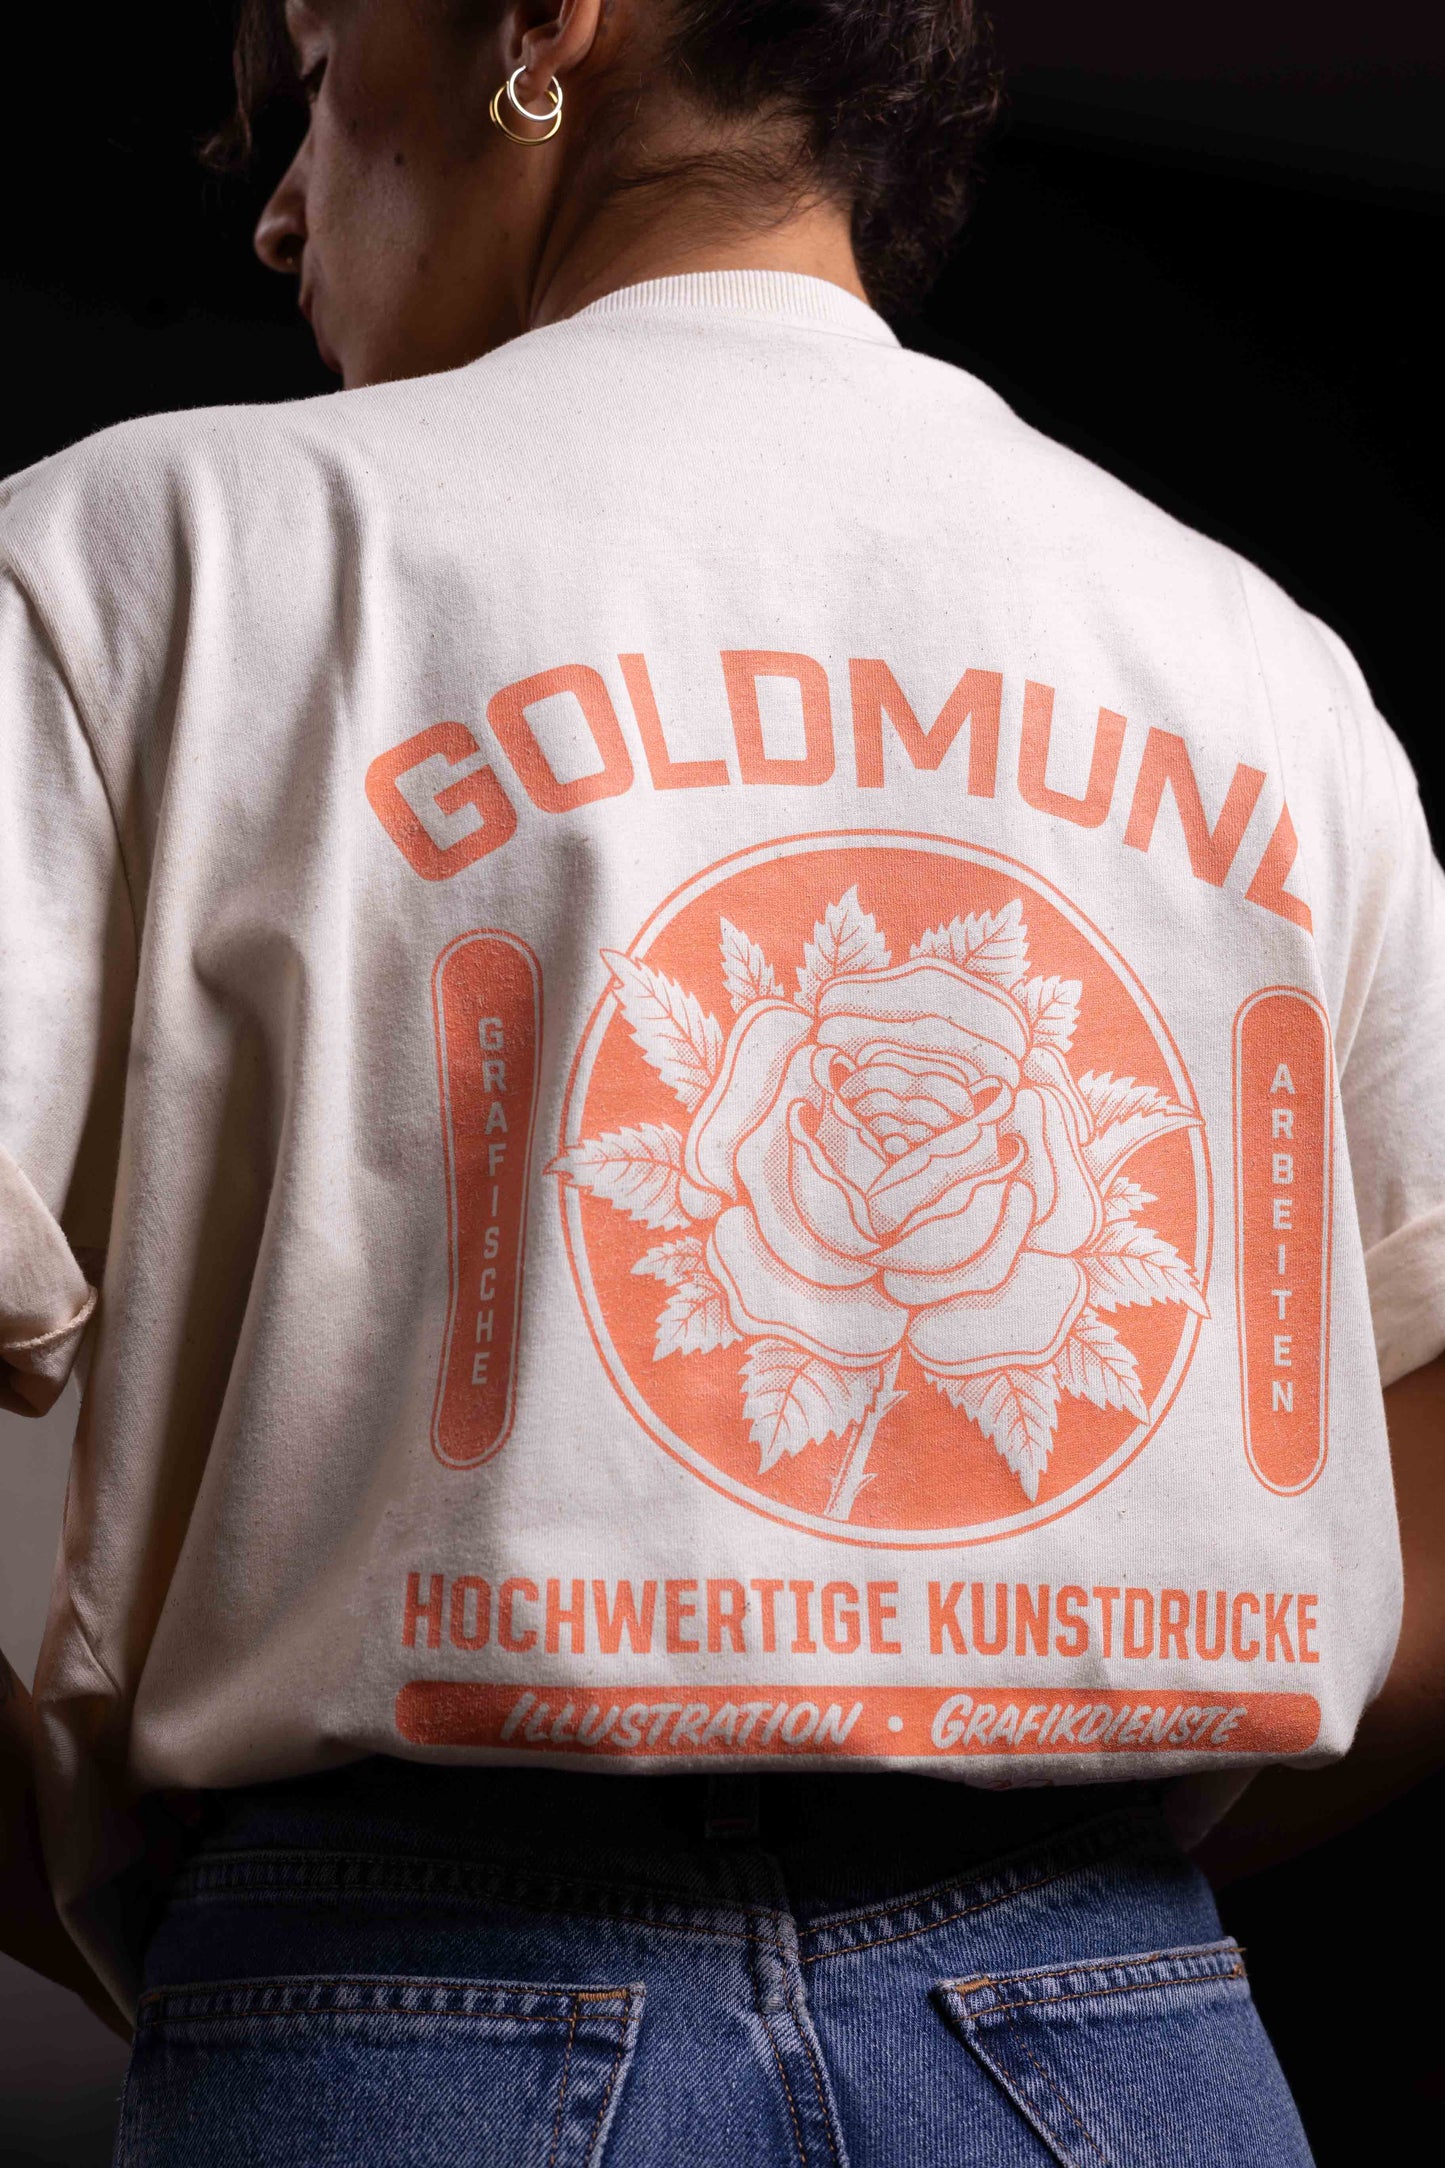 Goldmund Rose (Cream/Red)